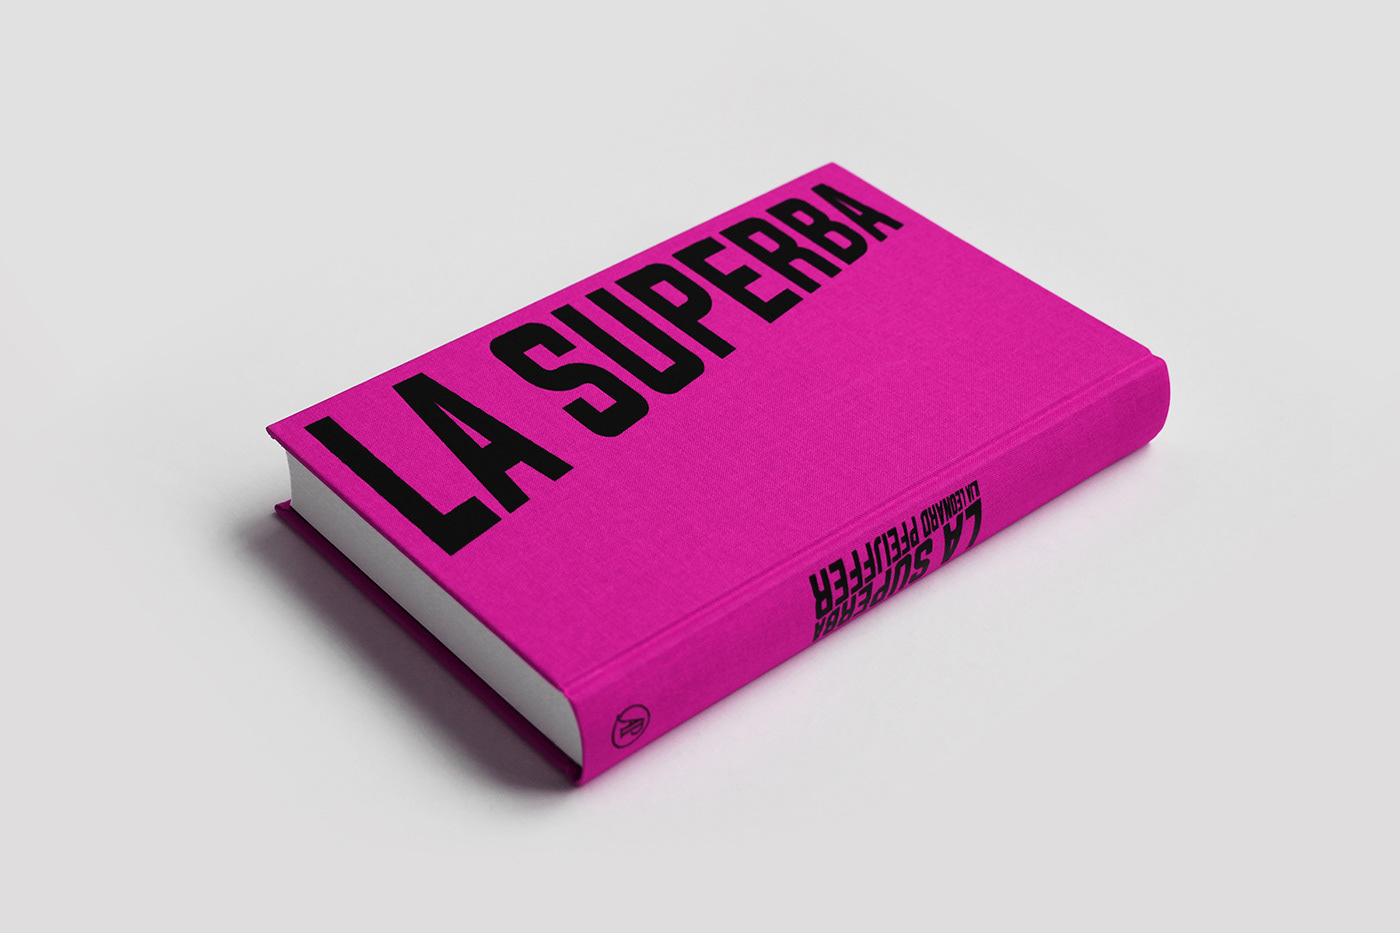 Bookdesign coverdesign novel Ilja Leonard Pfeijffer pantone fluo pink jacket editorial design  book